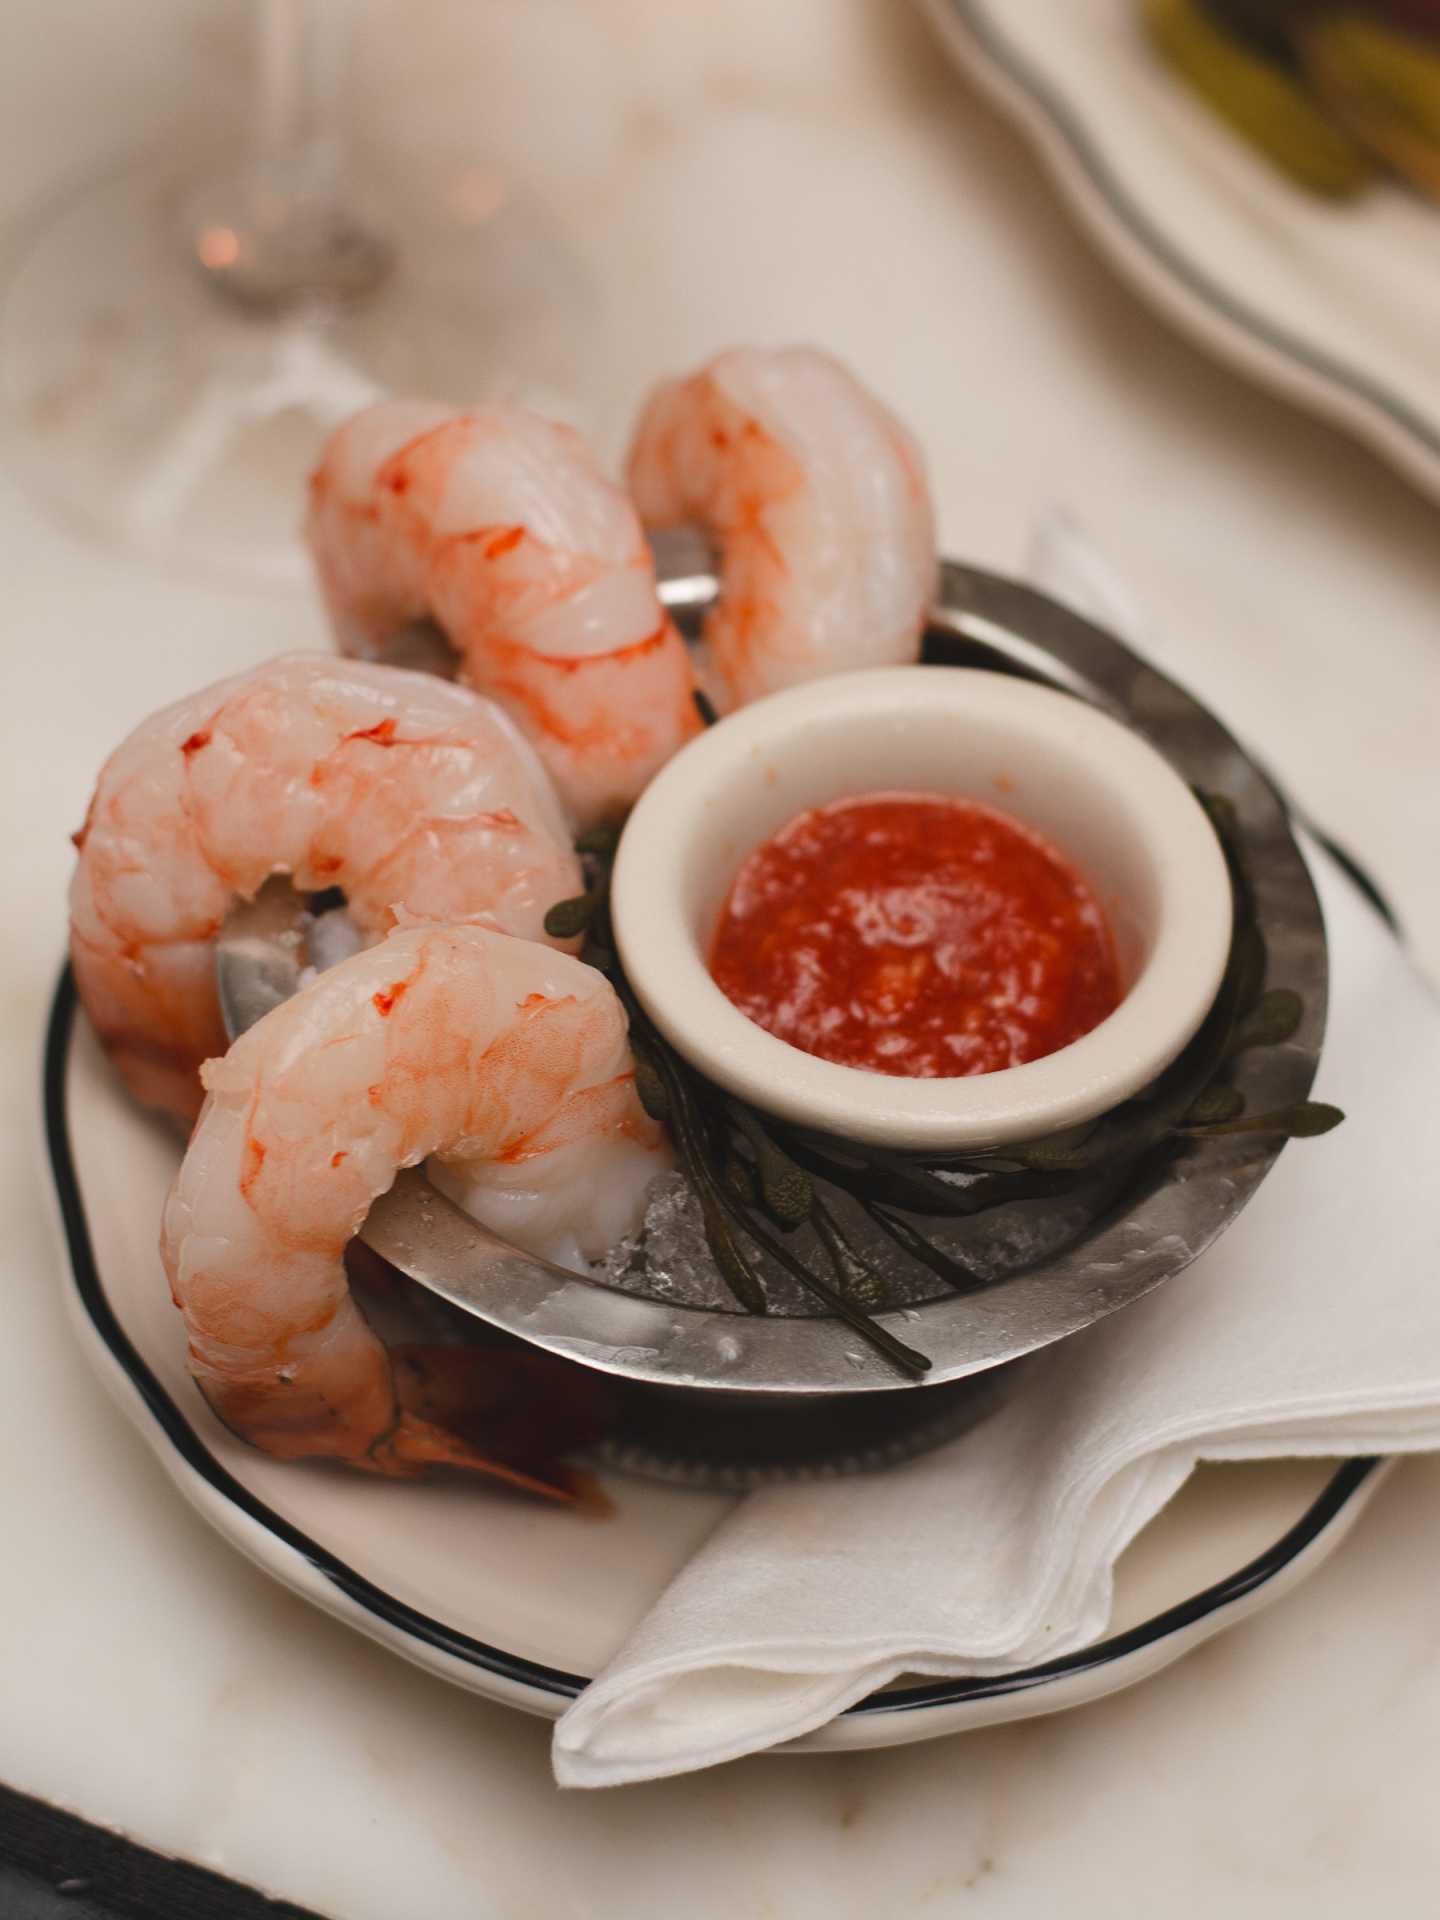 Best new Toronto restaurants | Shrimp appetizers at Cafe Renee in Toronto